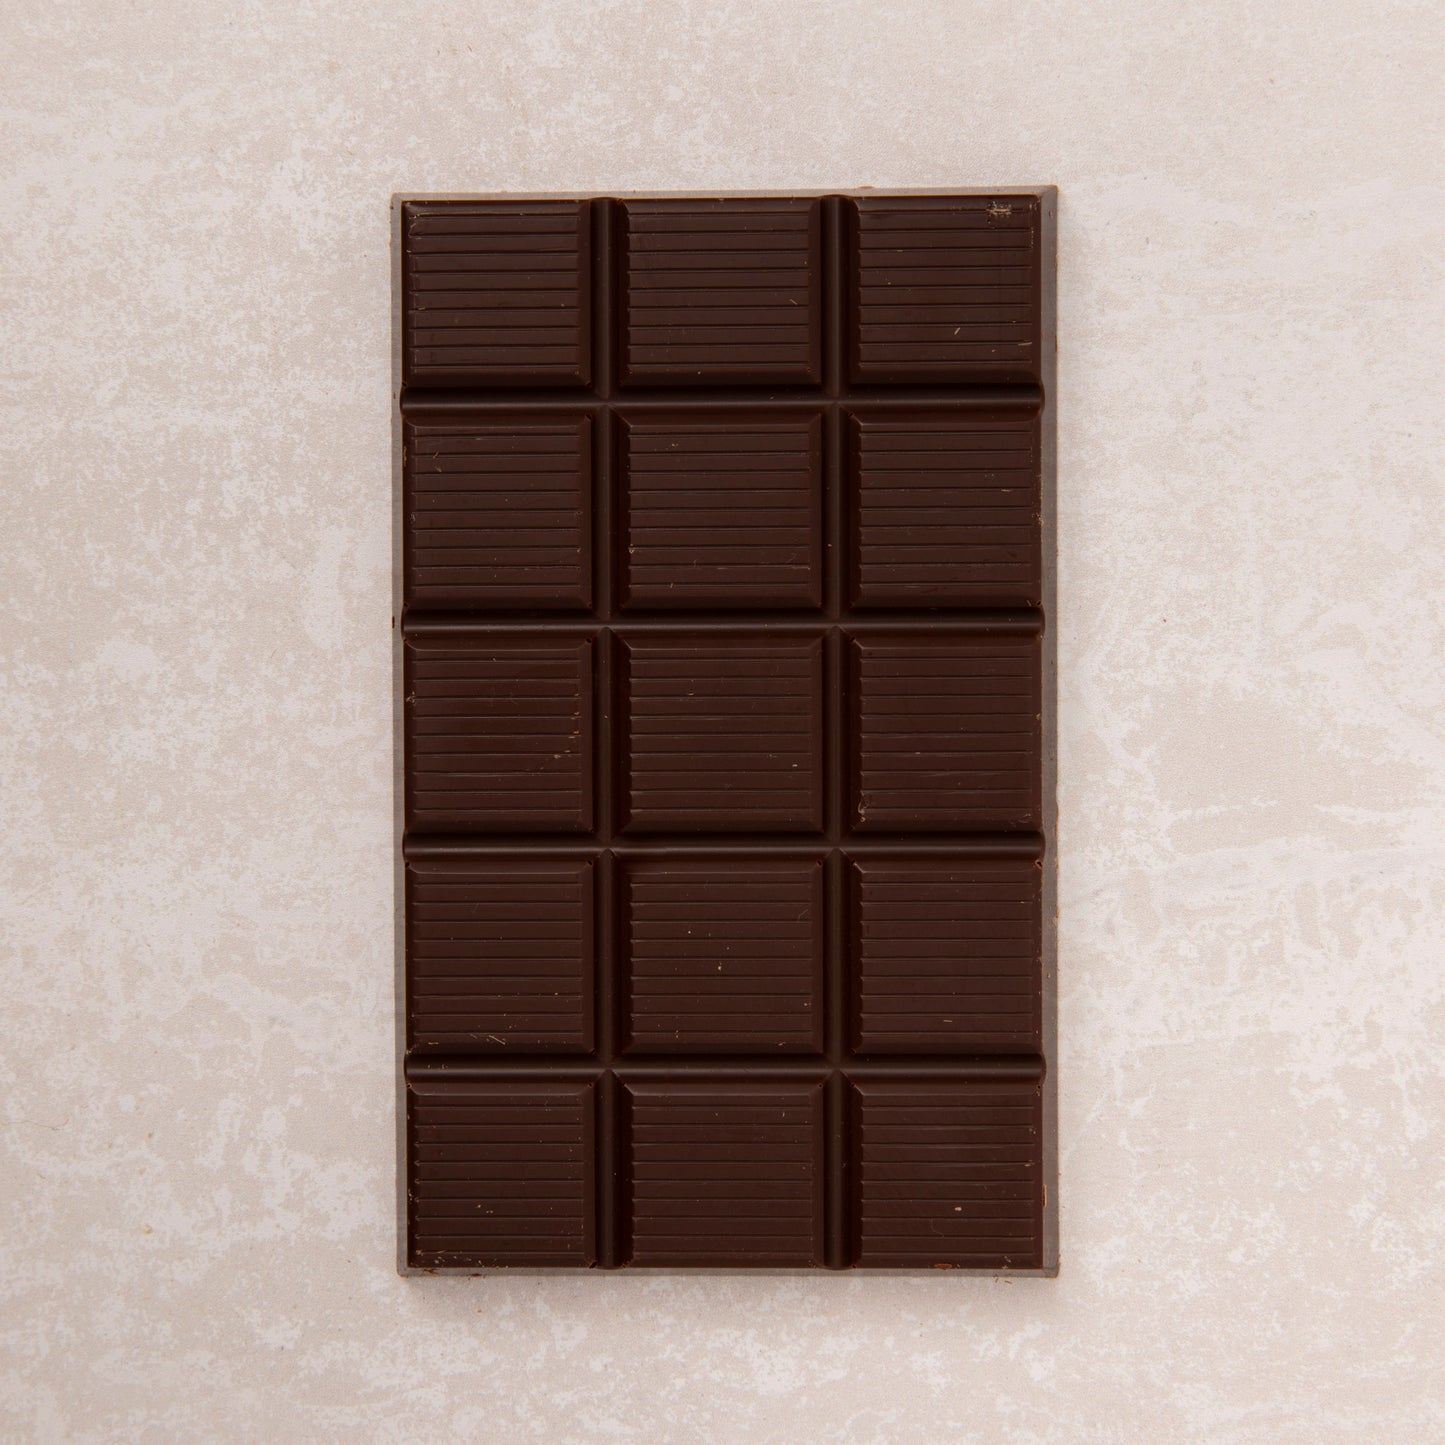 Single Origin 67% Madagascar Chocolate Block